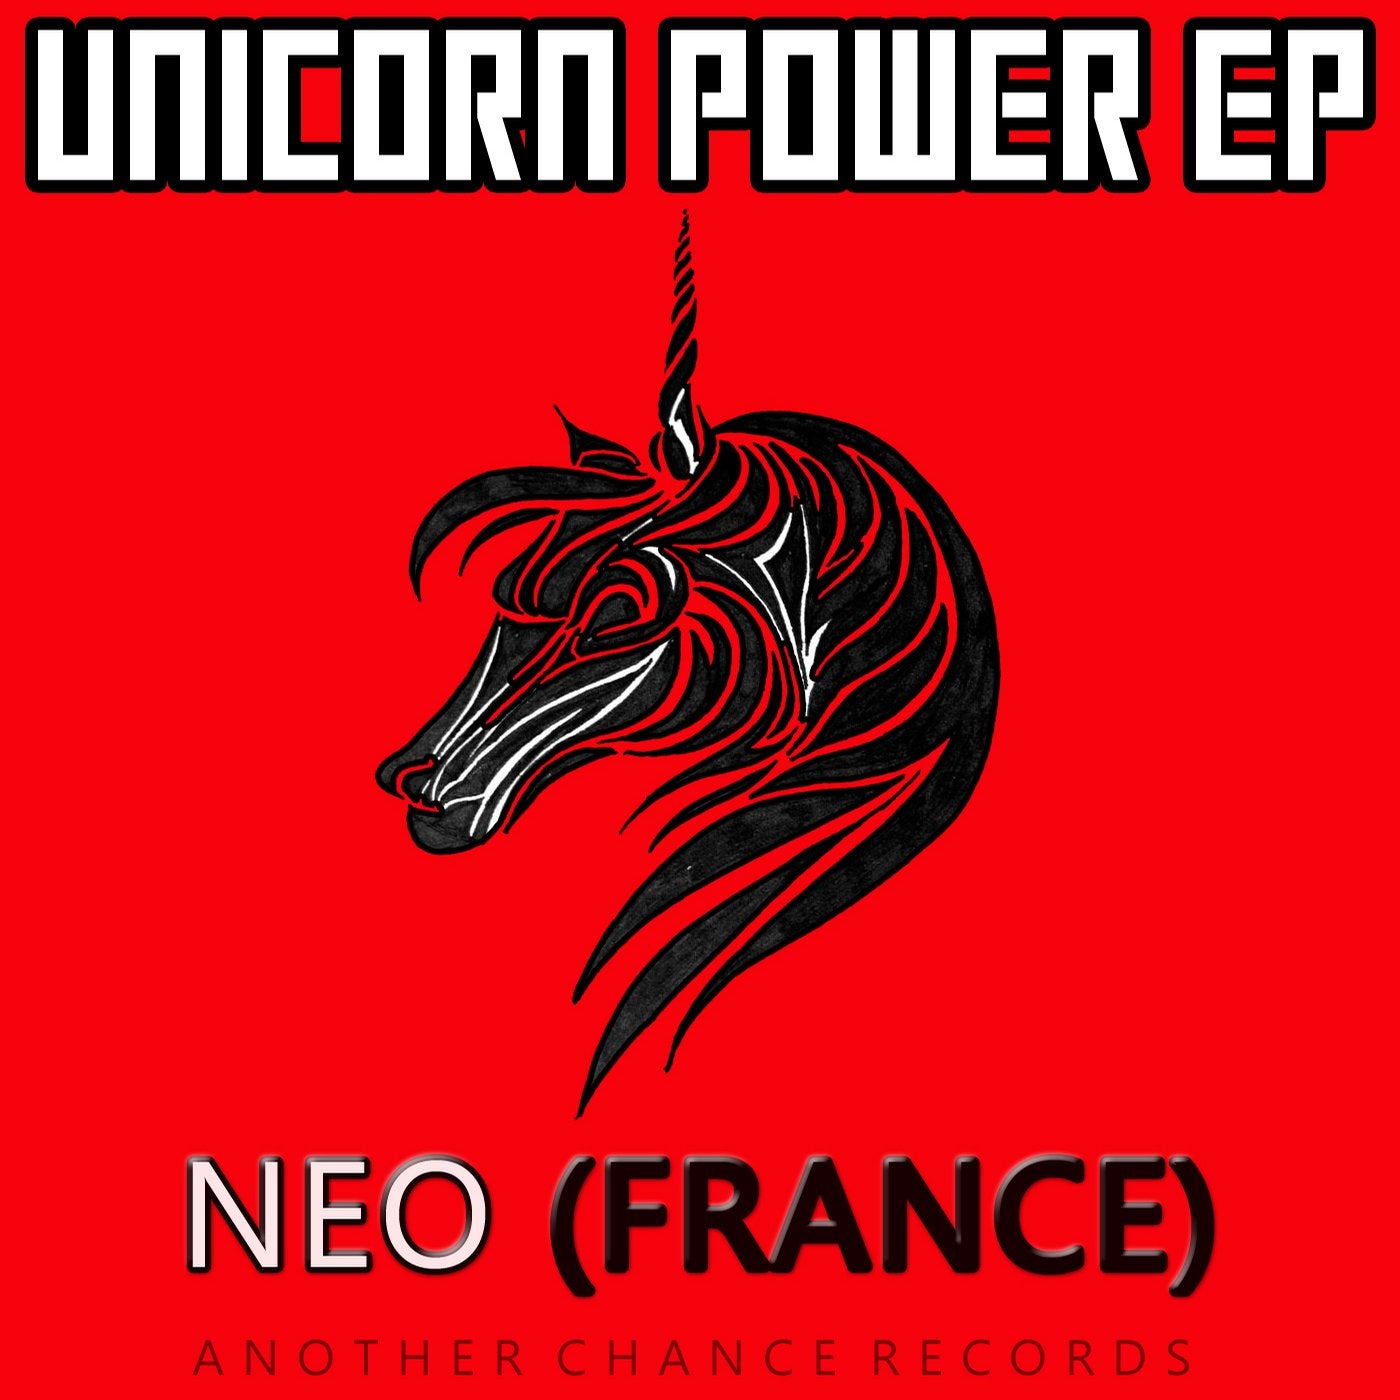 Unicorn Power EP